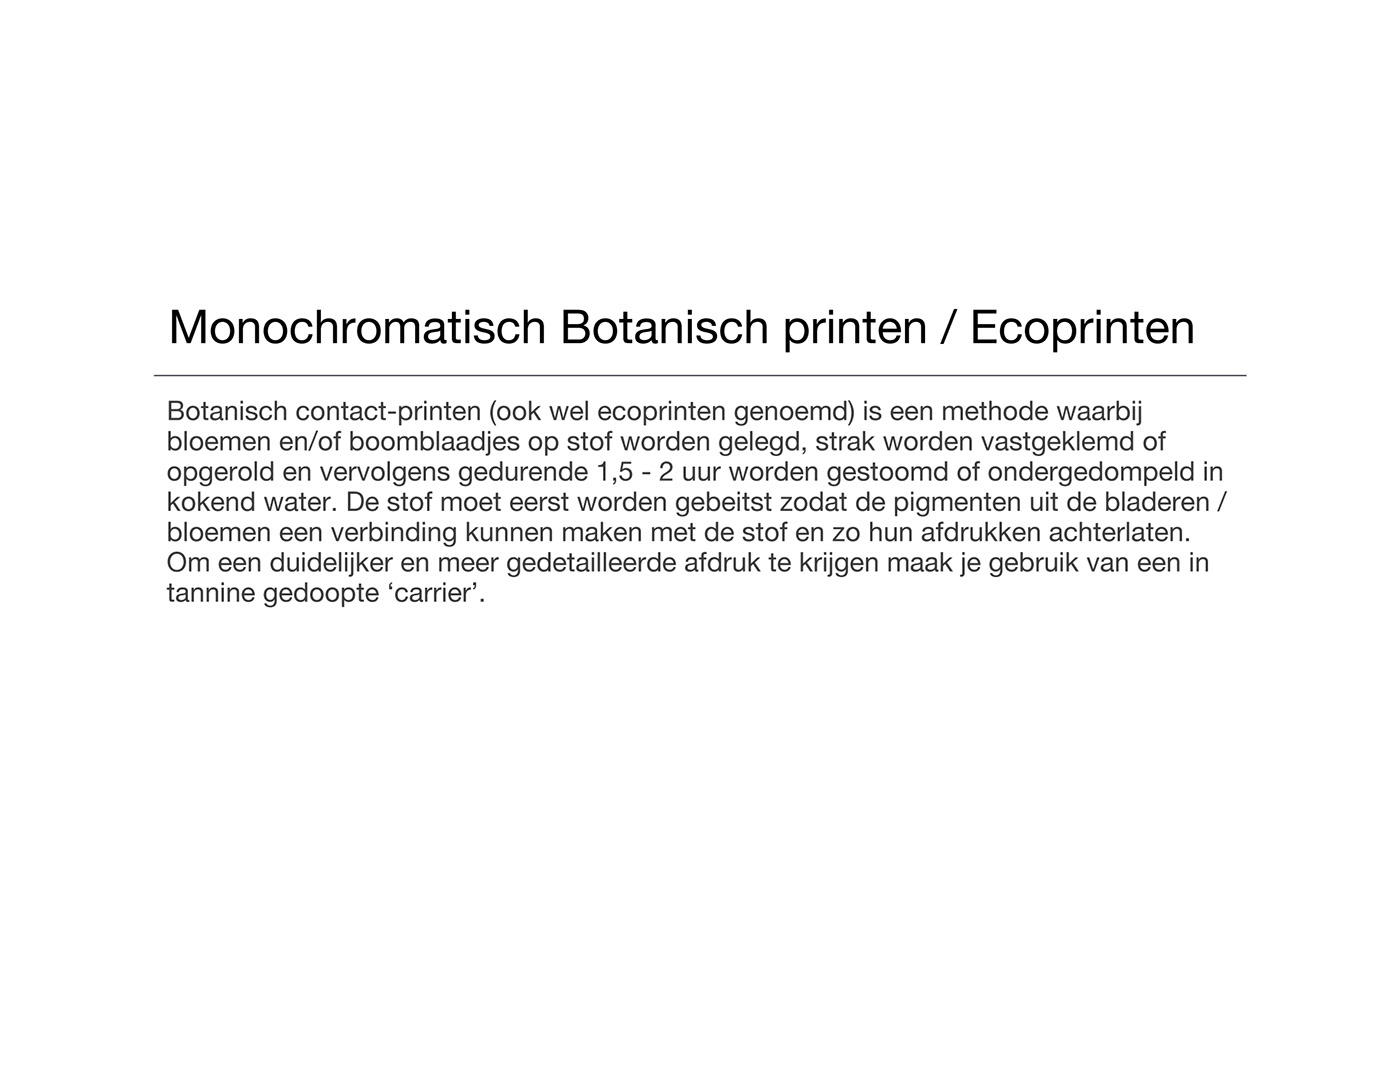 Botanical print Ecoprinten textileart  